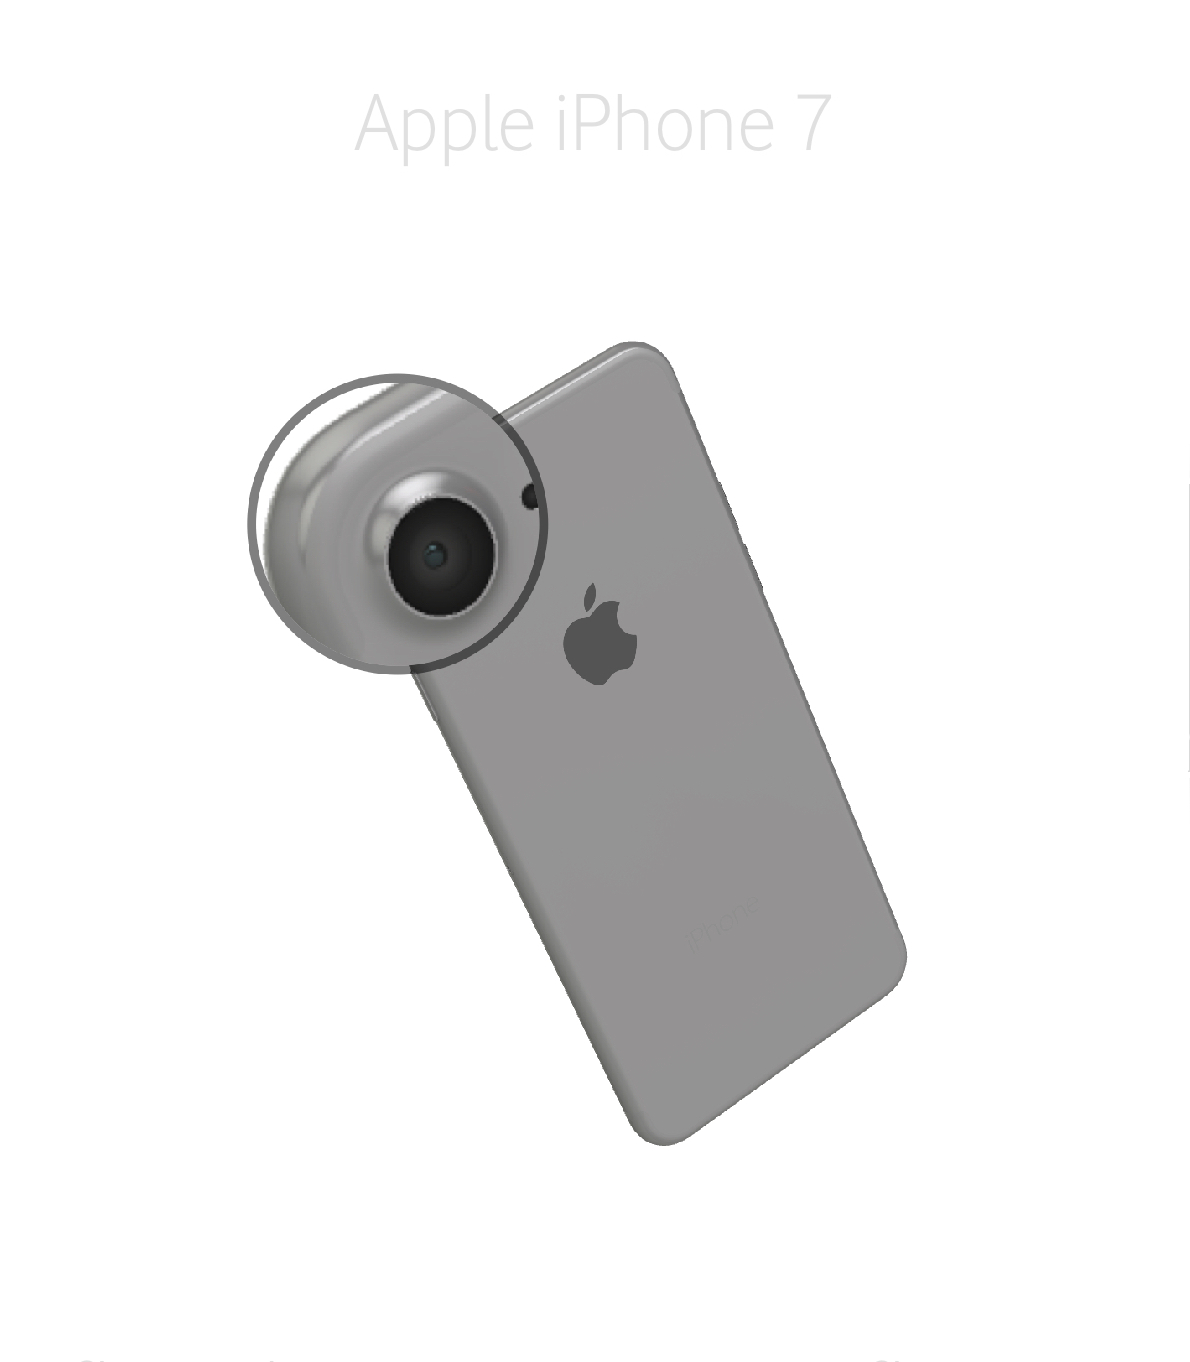 Laga mikrofon kamera iPhone 7